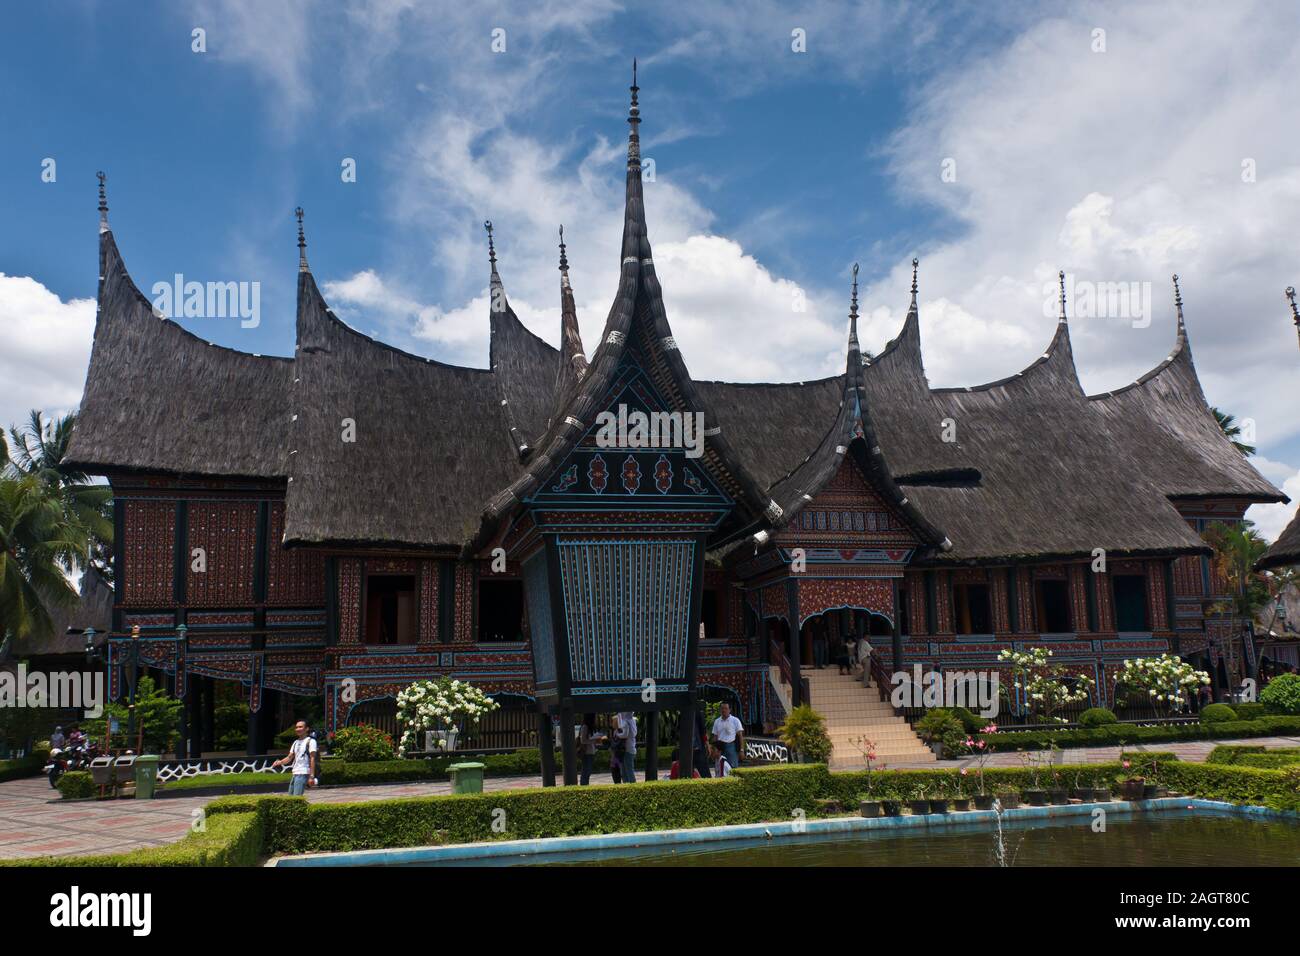 A pavilion of Sumatra in the 'Beautiful Indonesia' Miniature Park, Jakarta Stock Photo